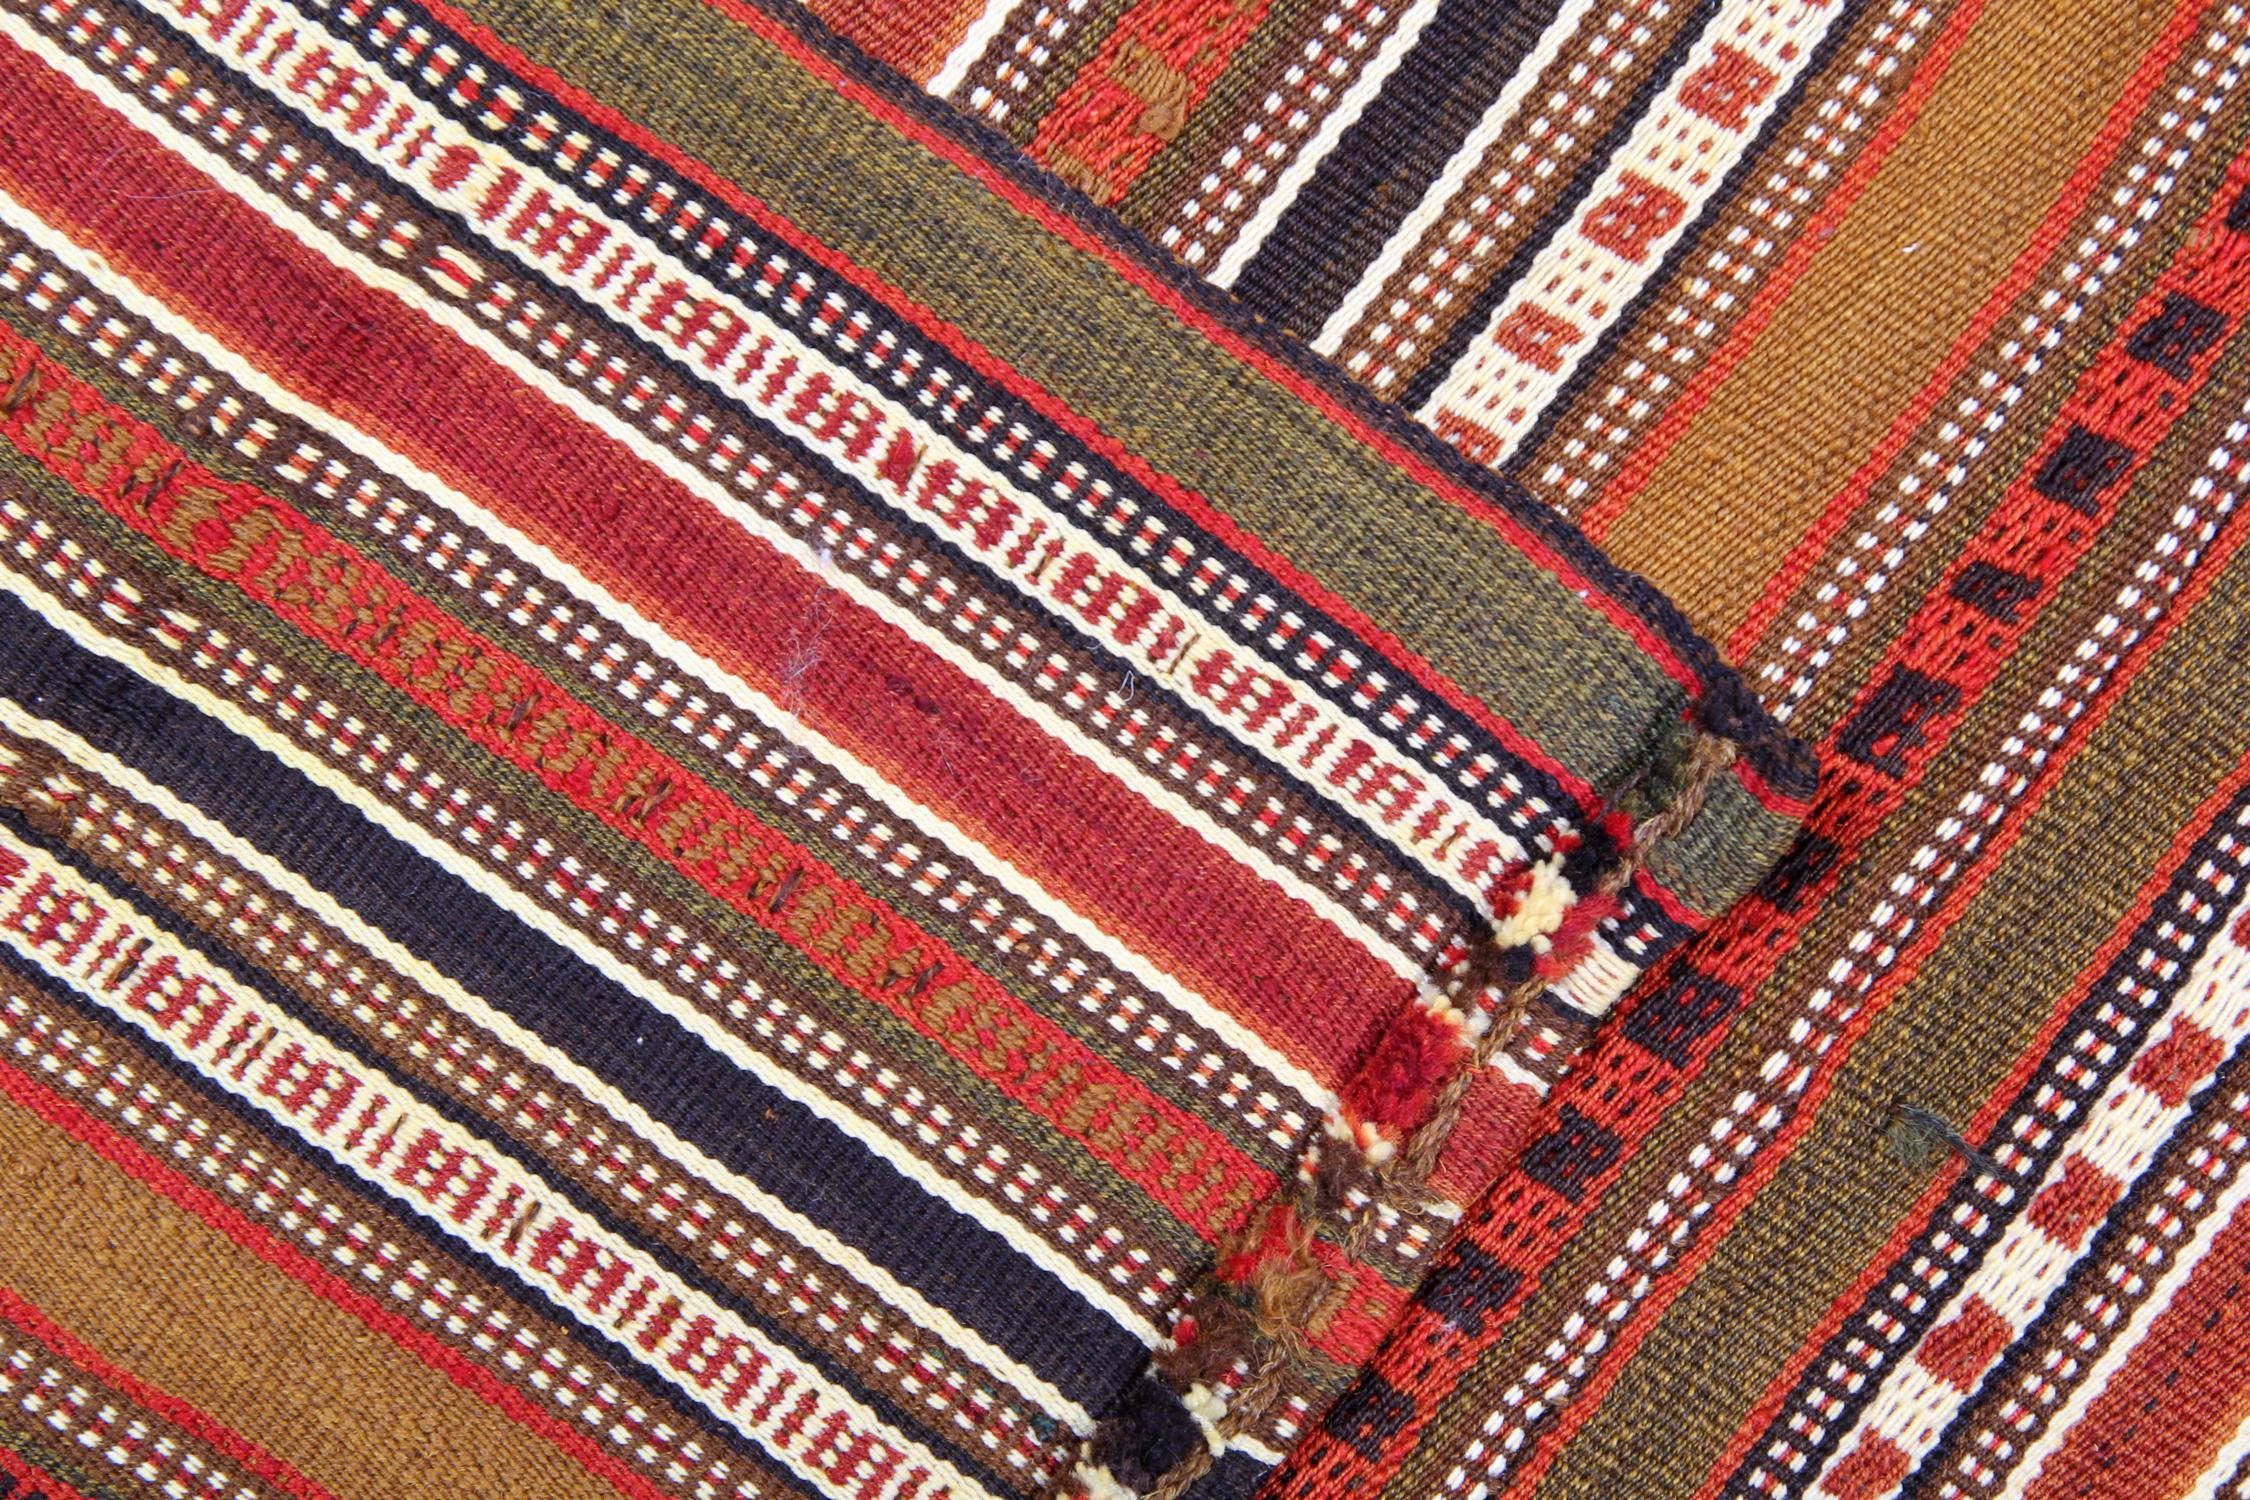 Azerbaijani Antique Rugs Azerbaijan 'Jajim' Red Striped Handmade Flat-Woven Textile For Sale